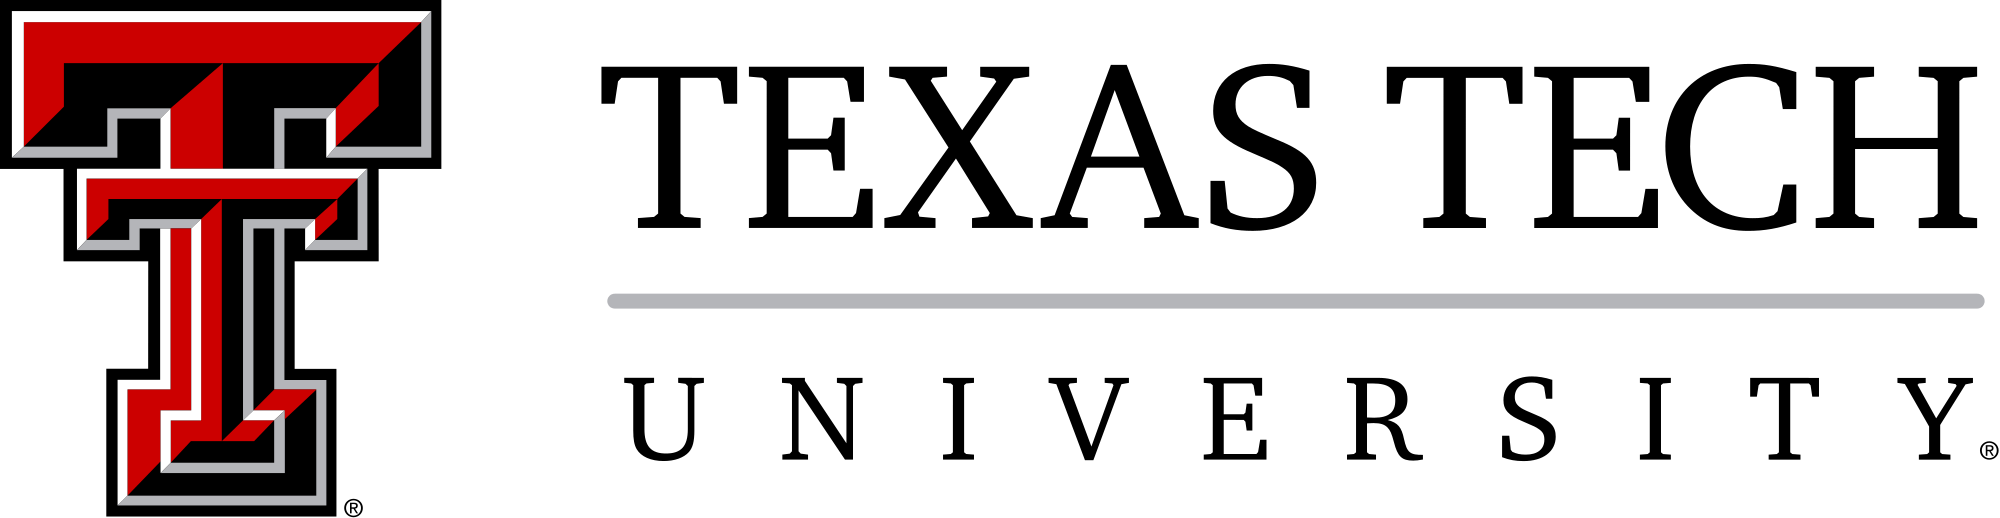 Texas Tech University Logo - File:Texas Tech University logo.svg - Wikimedia Commons